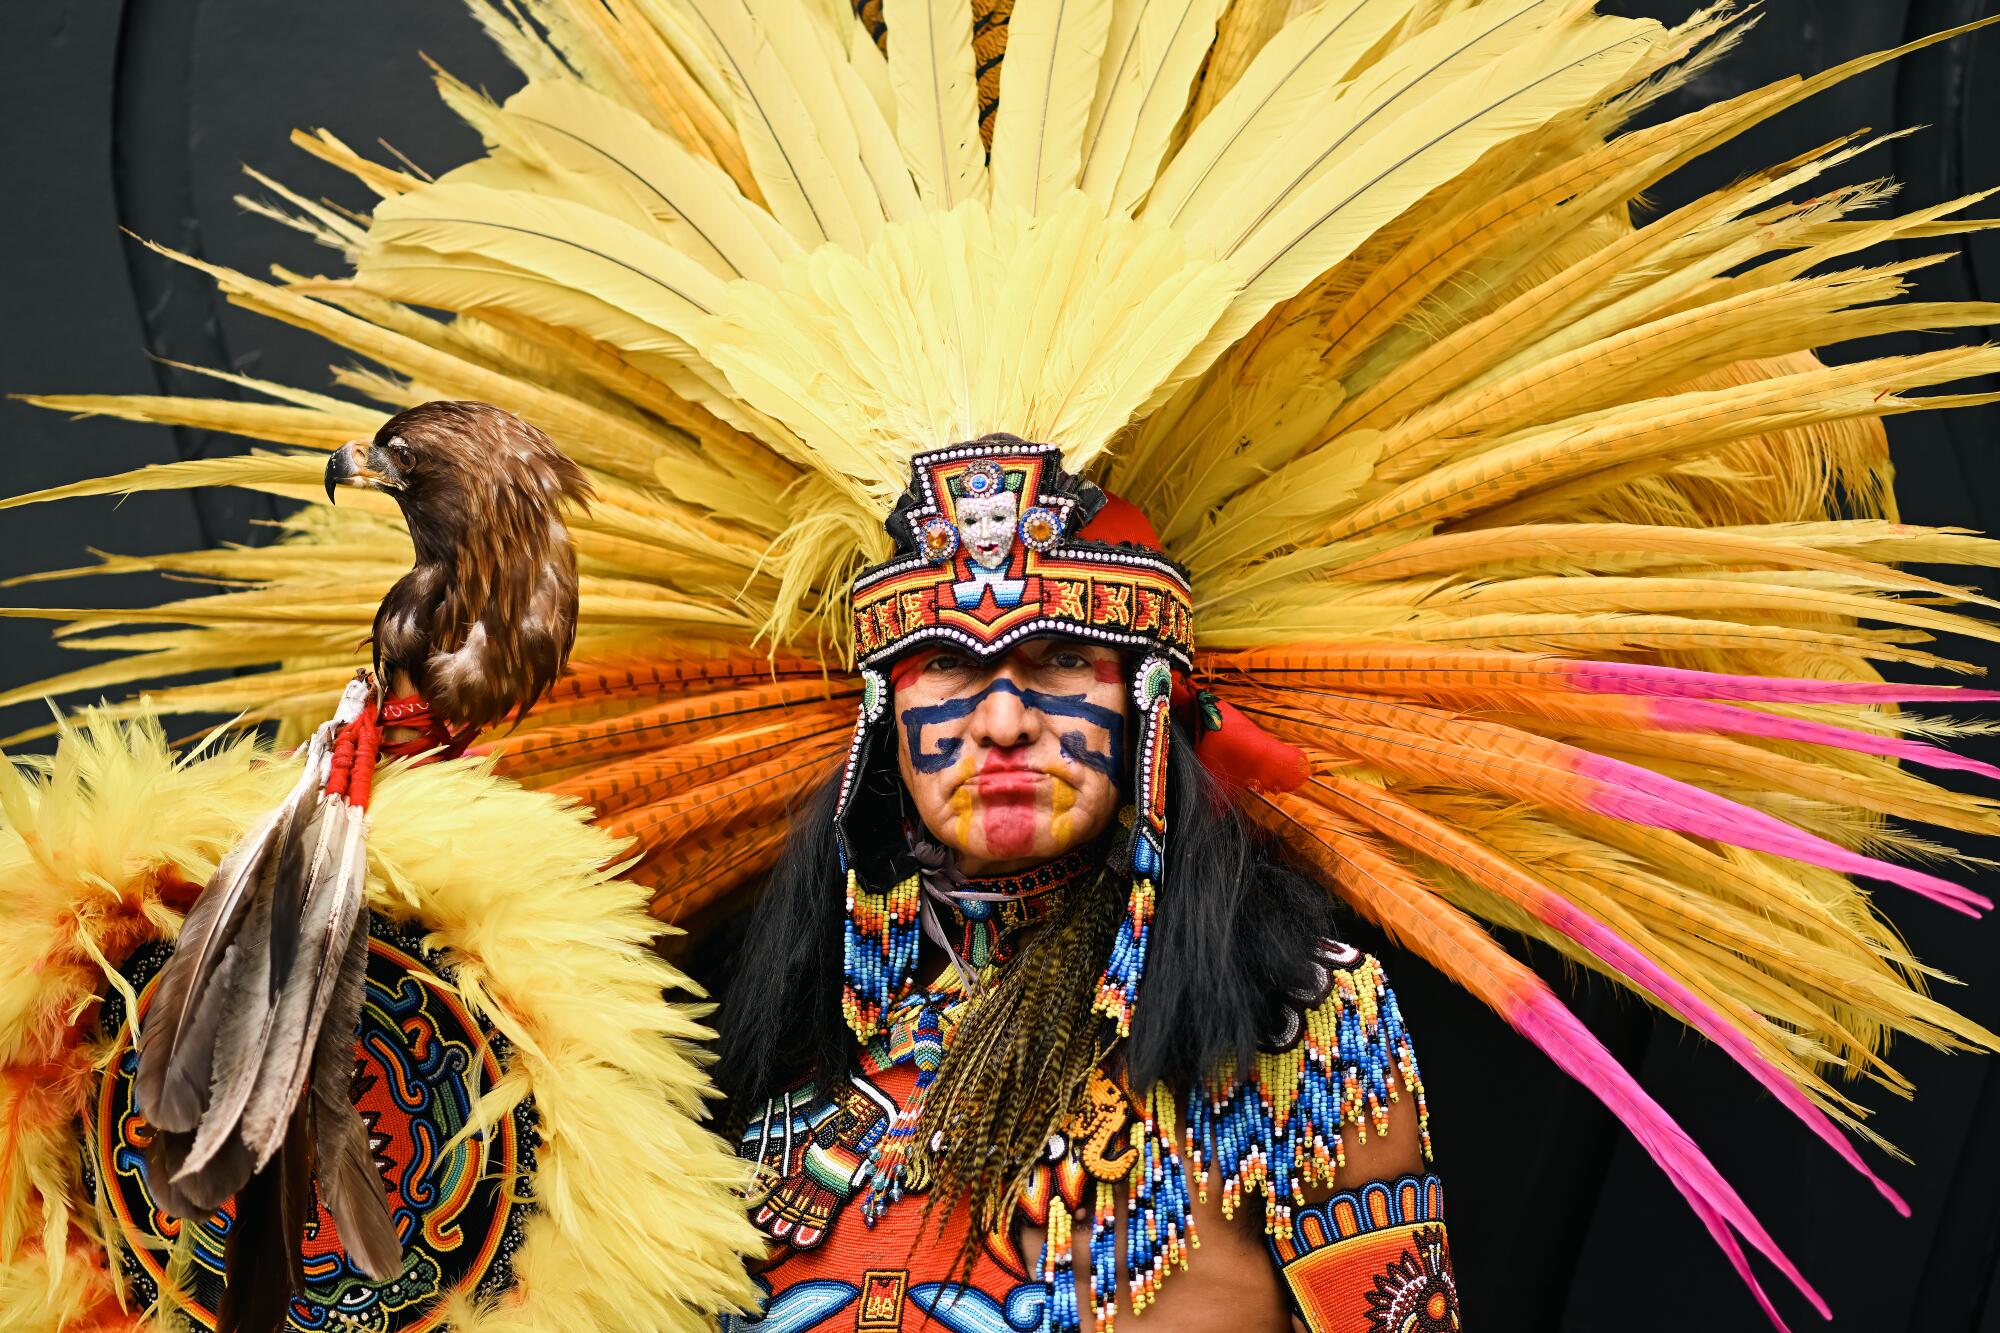 Lazaro Arvizu wears traditional Danza Azteca regalia like face paint, feathers and beading.